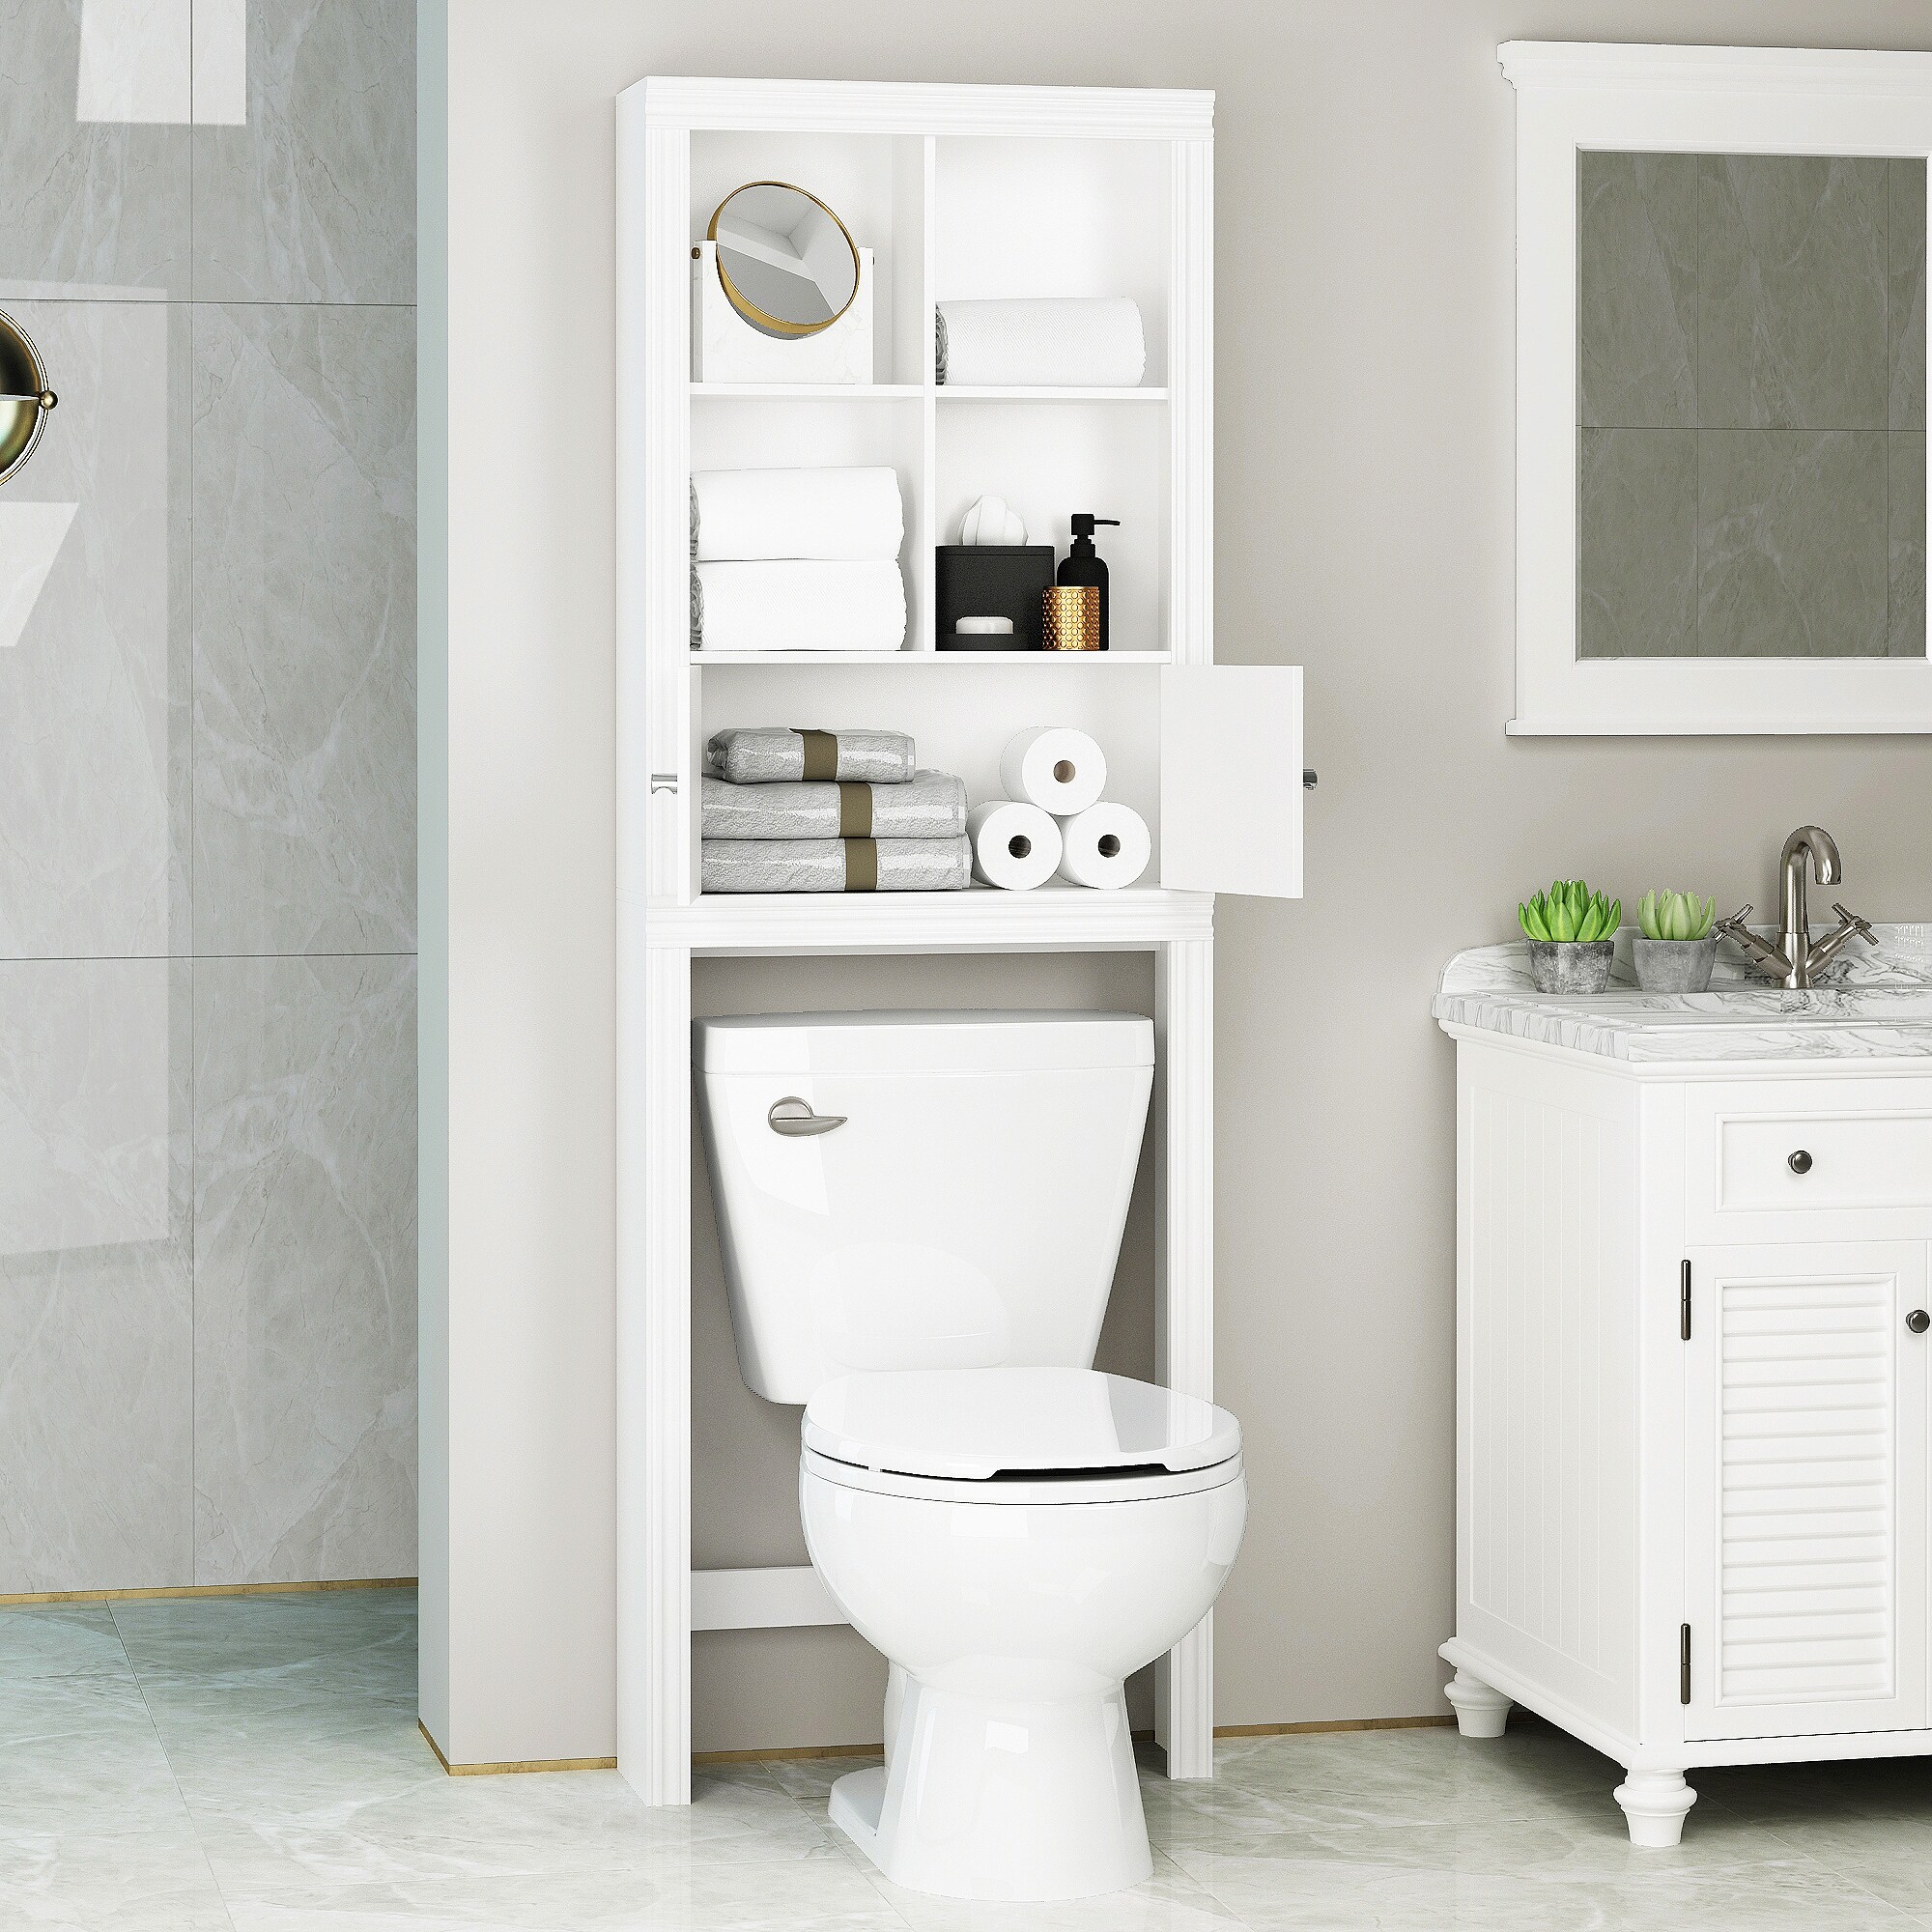 https://ak1.ostkcdn.com/images/products/is/images/direct/db22bc3894de74468da0a5e126fbdf90d6f63fcd/Spirich-Home-Bathroom-Shelf-Over-The-Toilet%2C-Bathroom-Cabinet-Organizer-Over-Toilet%2C-Space-Saver-Cabinet-Storage-%28White%29.jpg